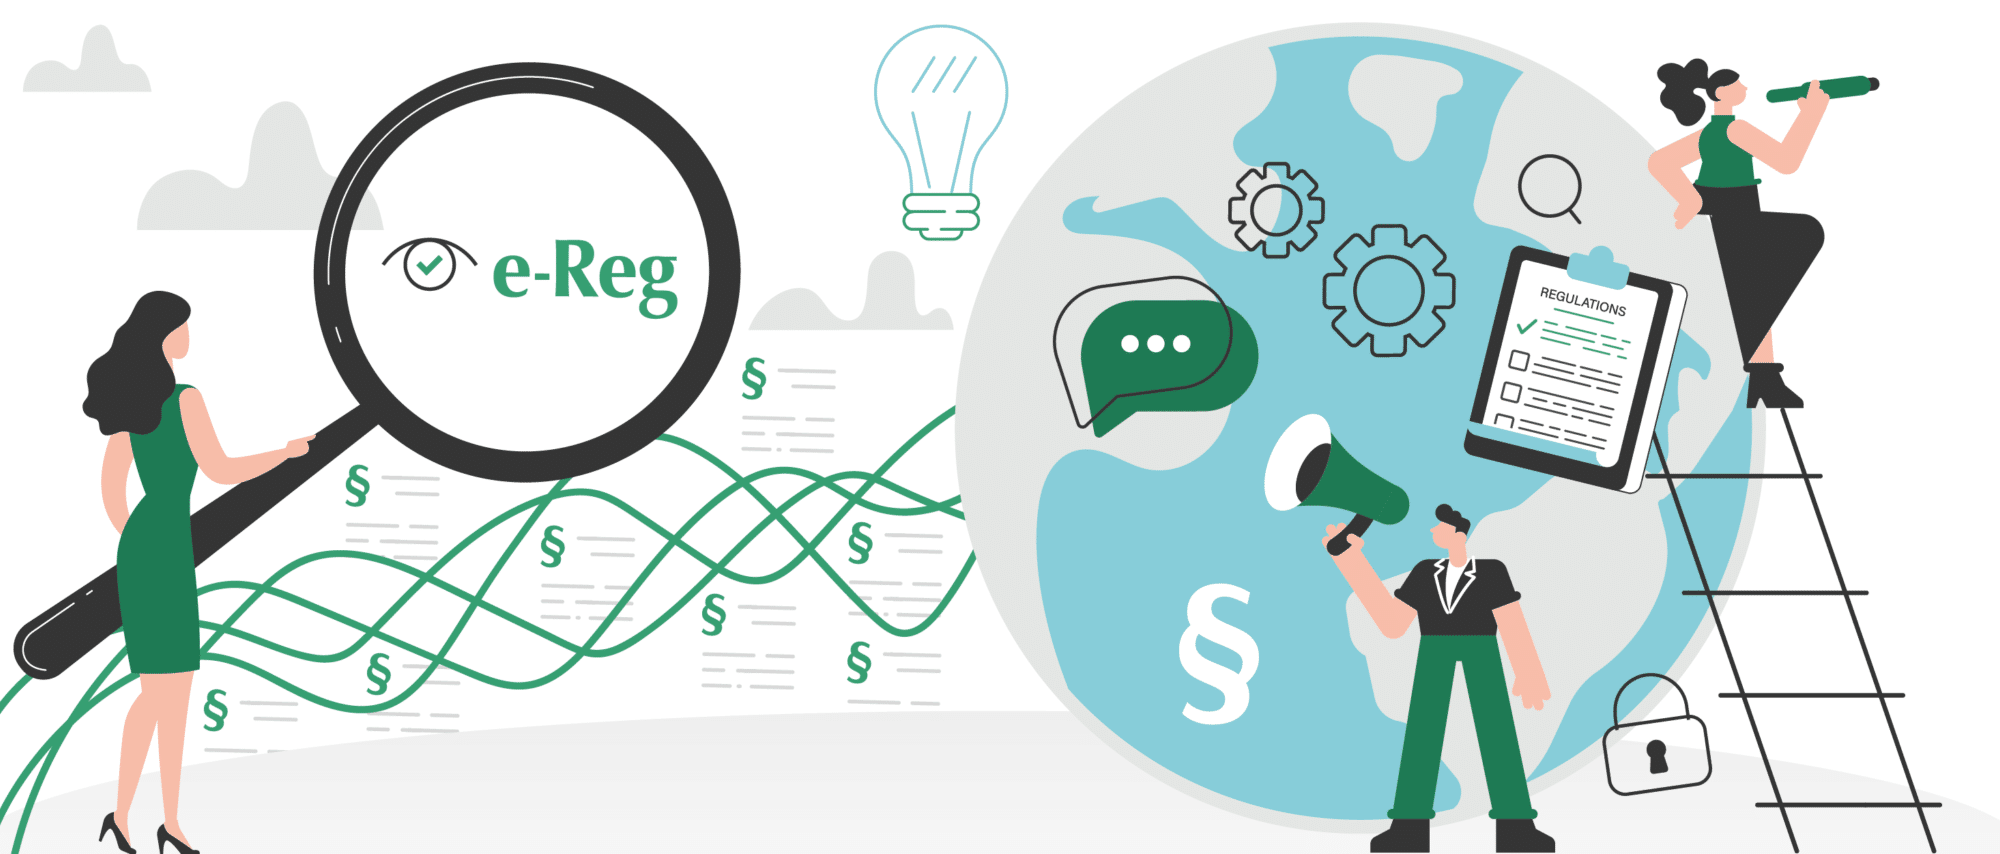 Regulatory research and RegTech